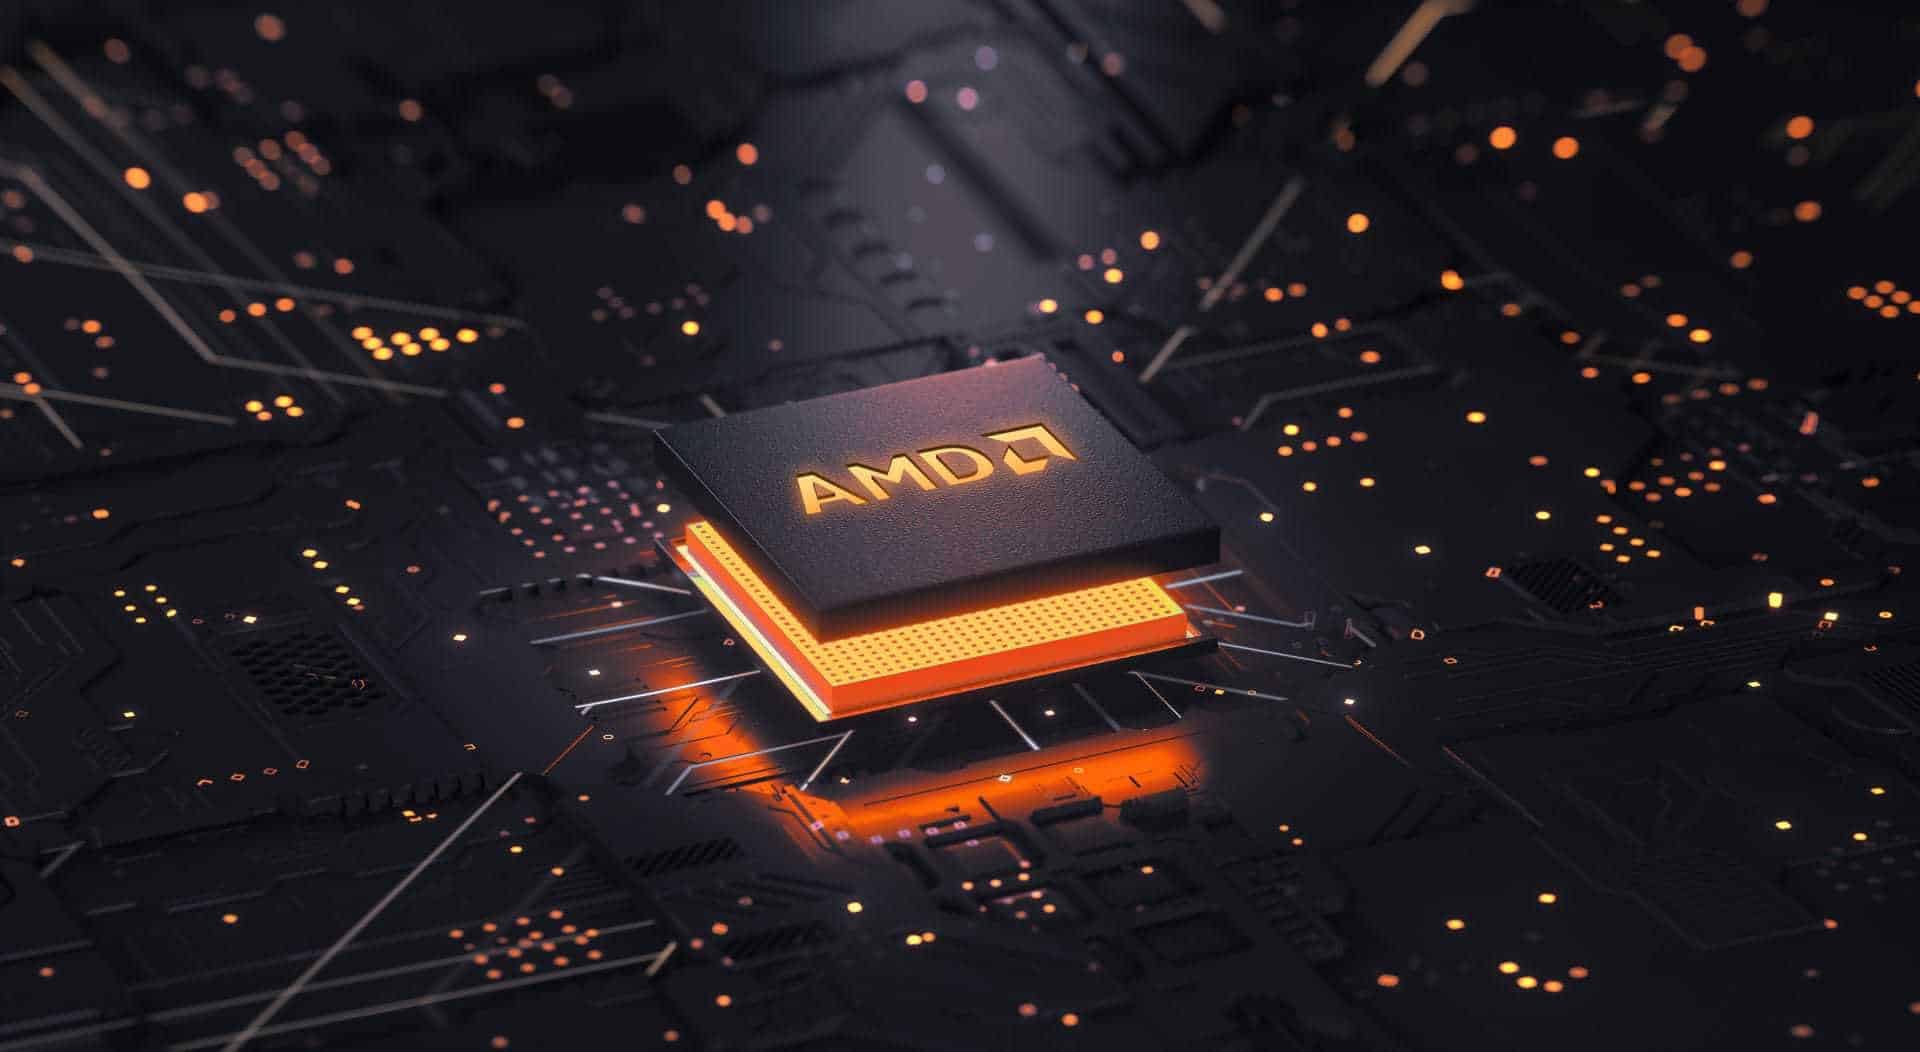 AMD Ryzen 9 4900H Spotted In Online Benchmarks